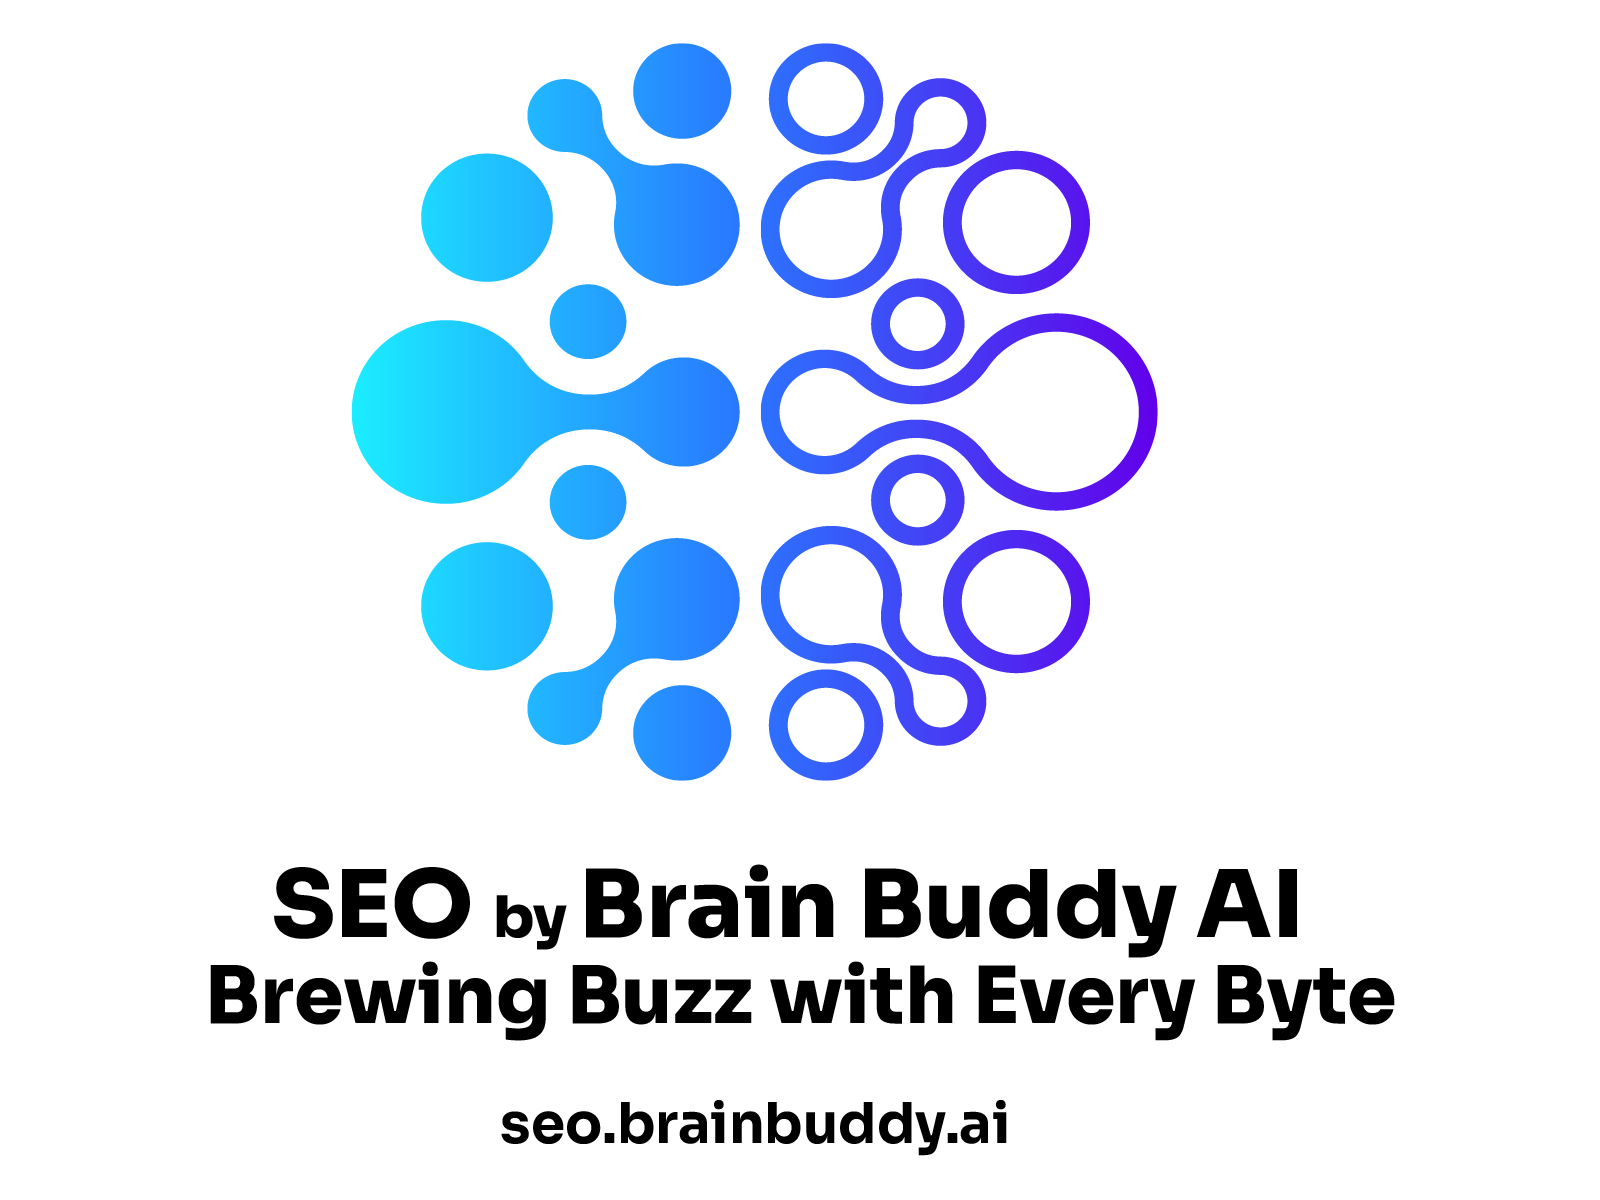 Brain Buddy AI